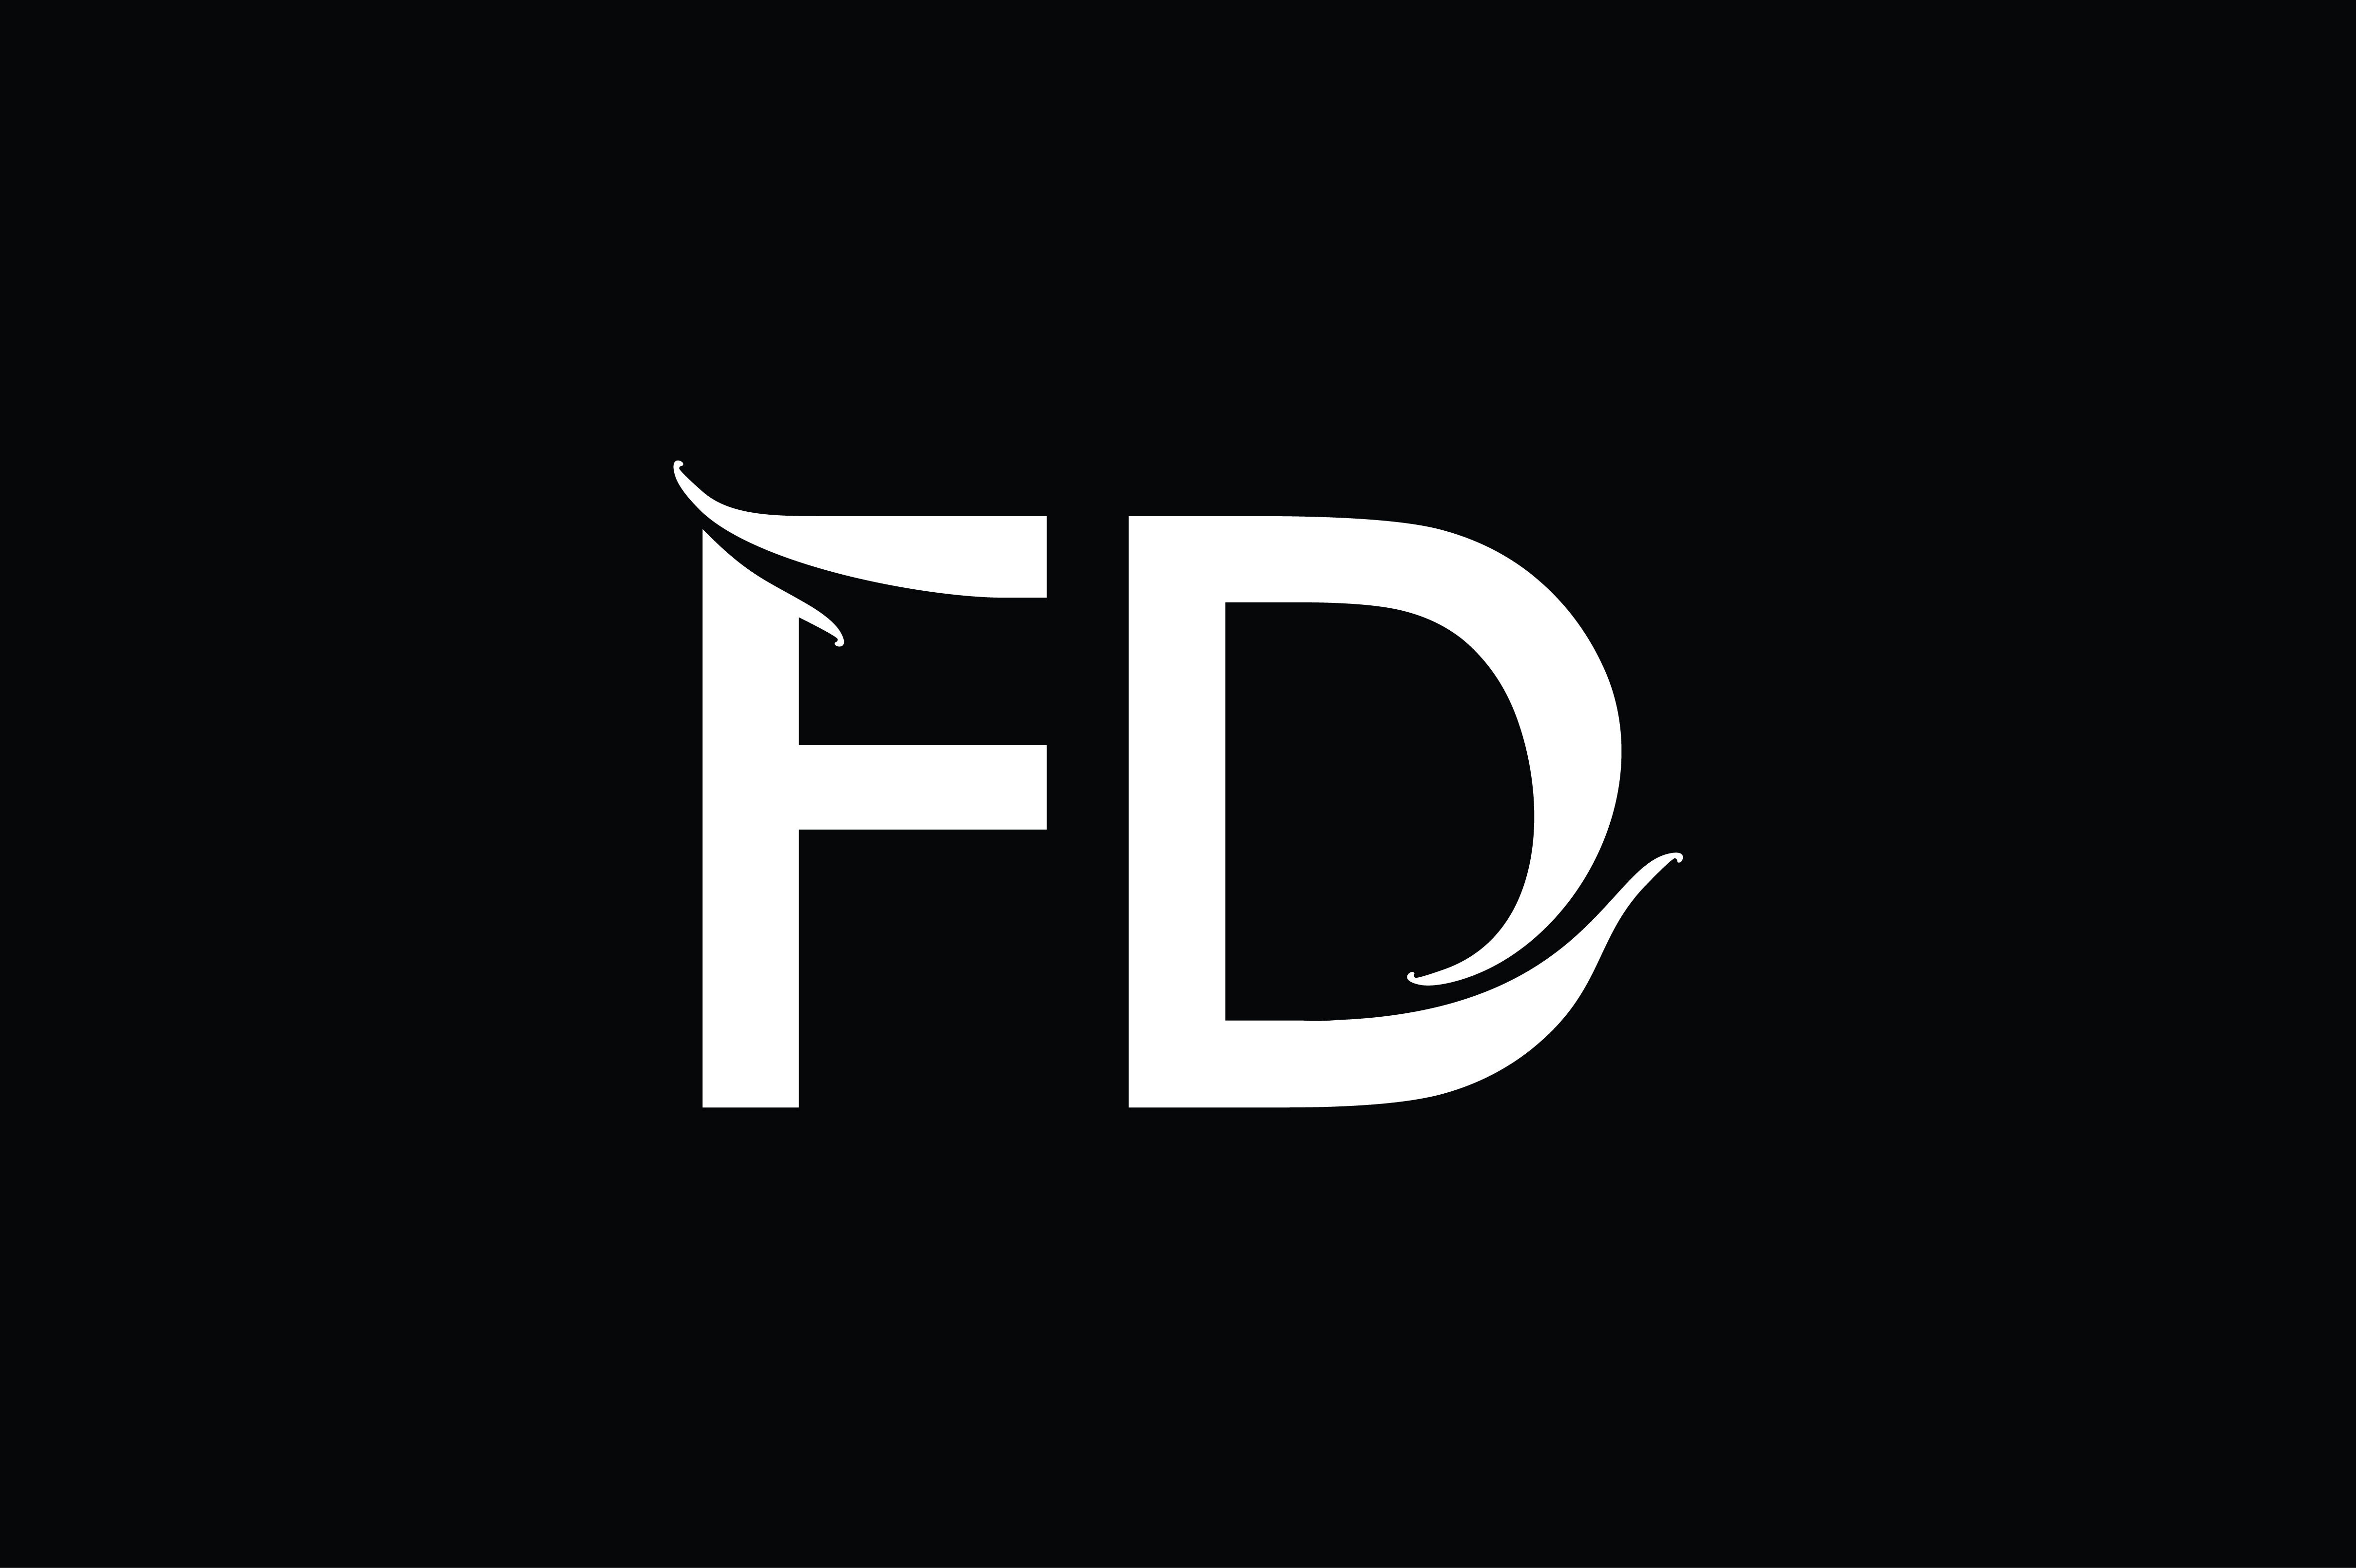 fd-monogram-logo-design-by-vectorseller-thehungryjpeg